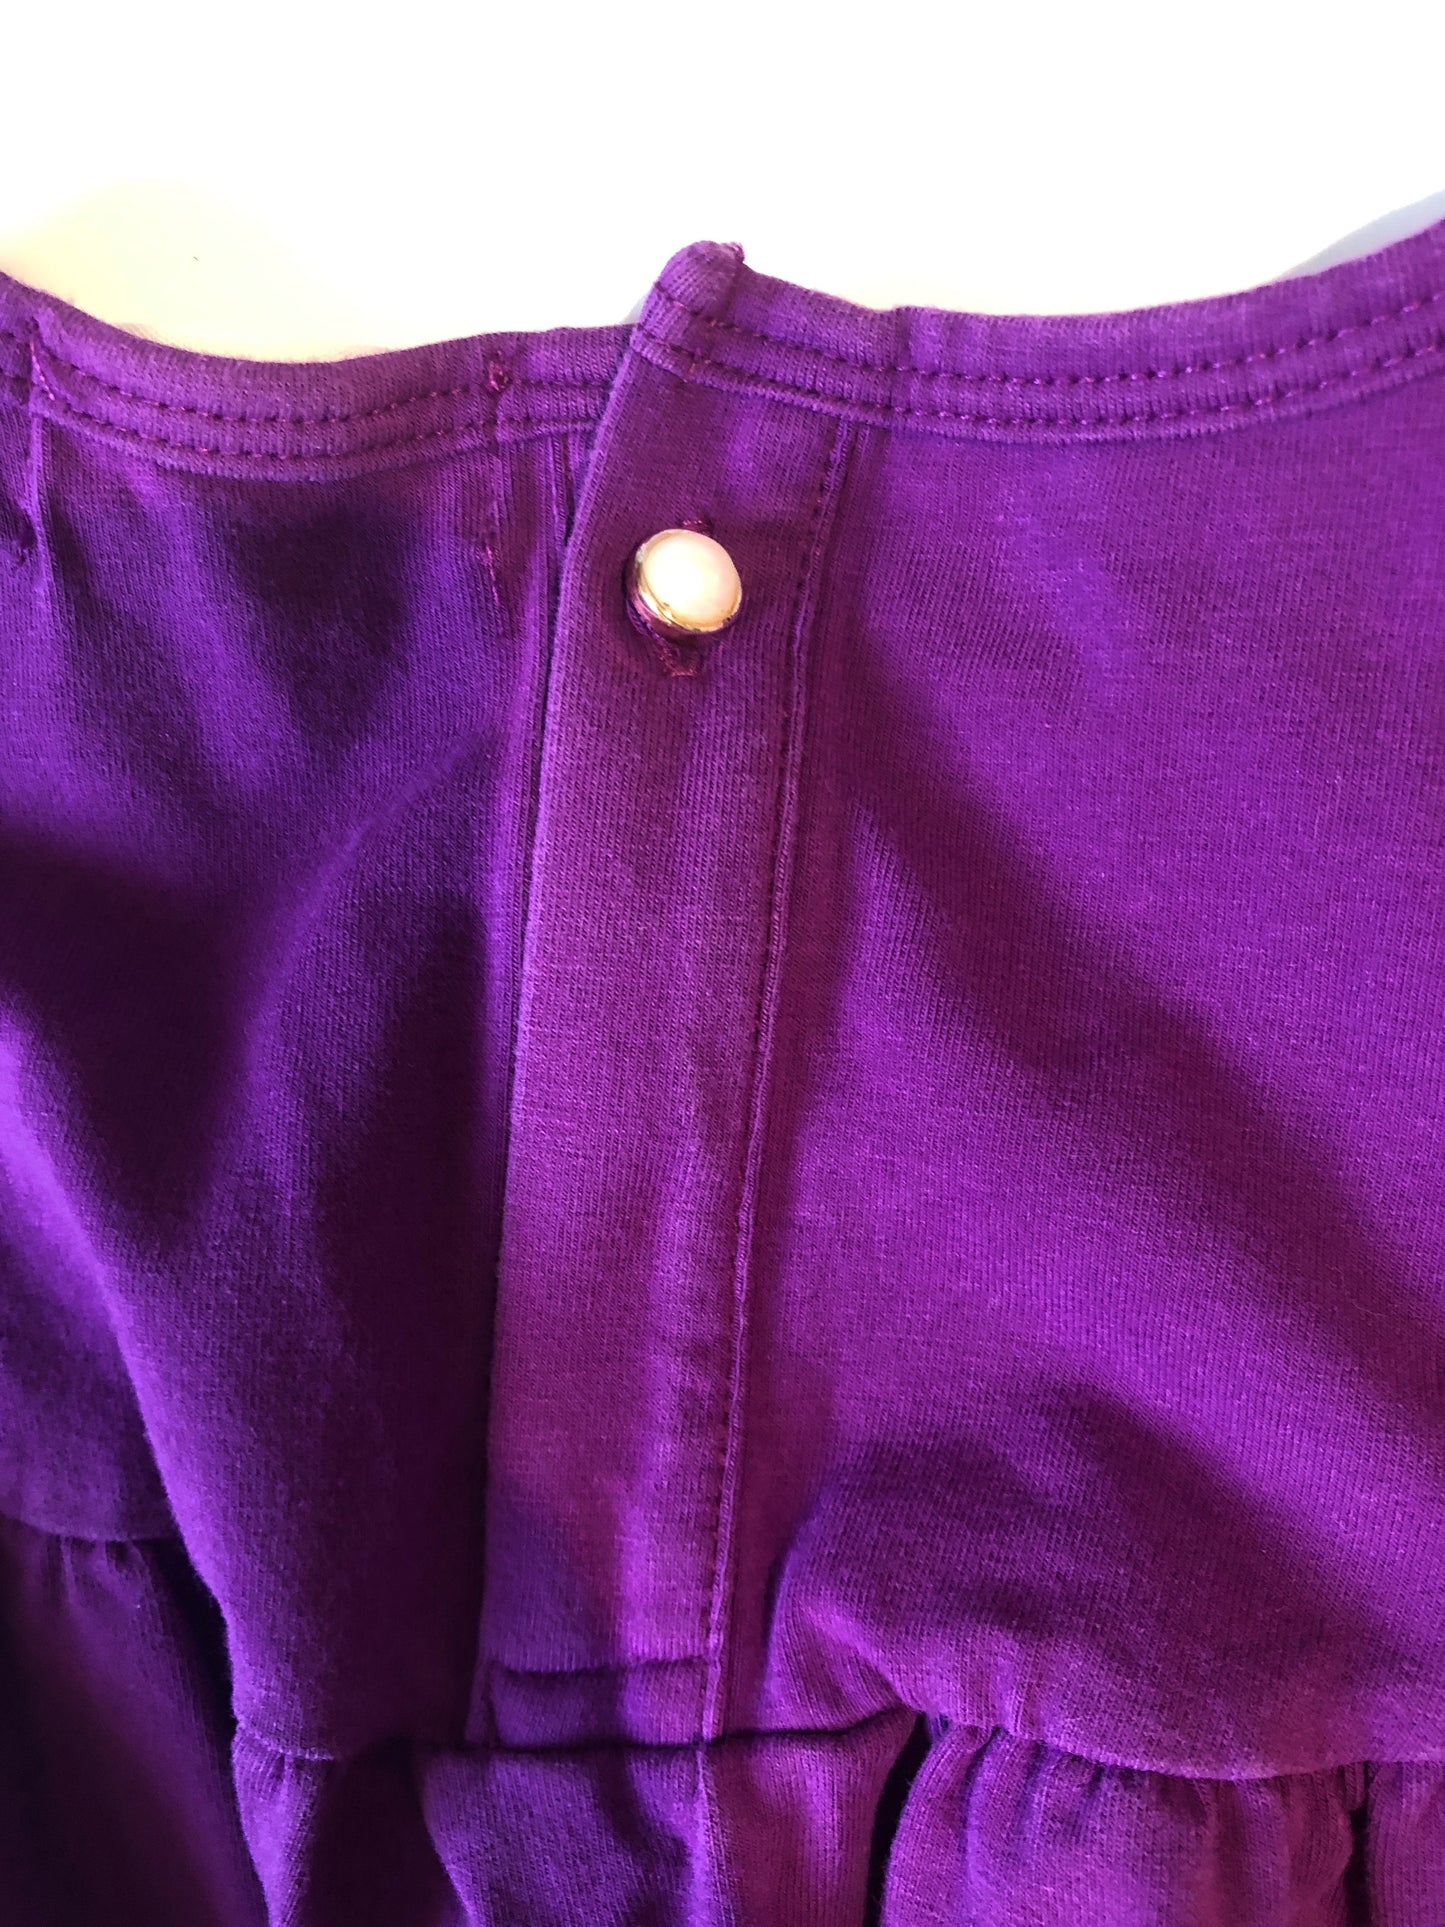 12-18 month girls Hanna shorts and purple boutique shirt set